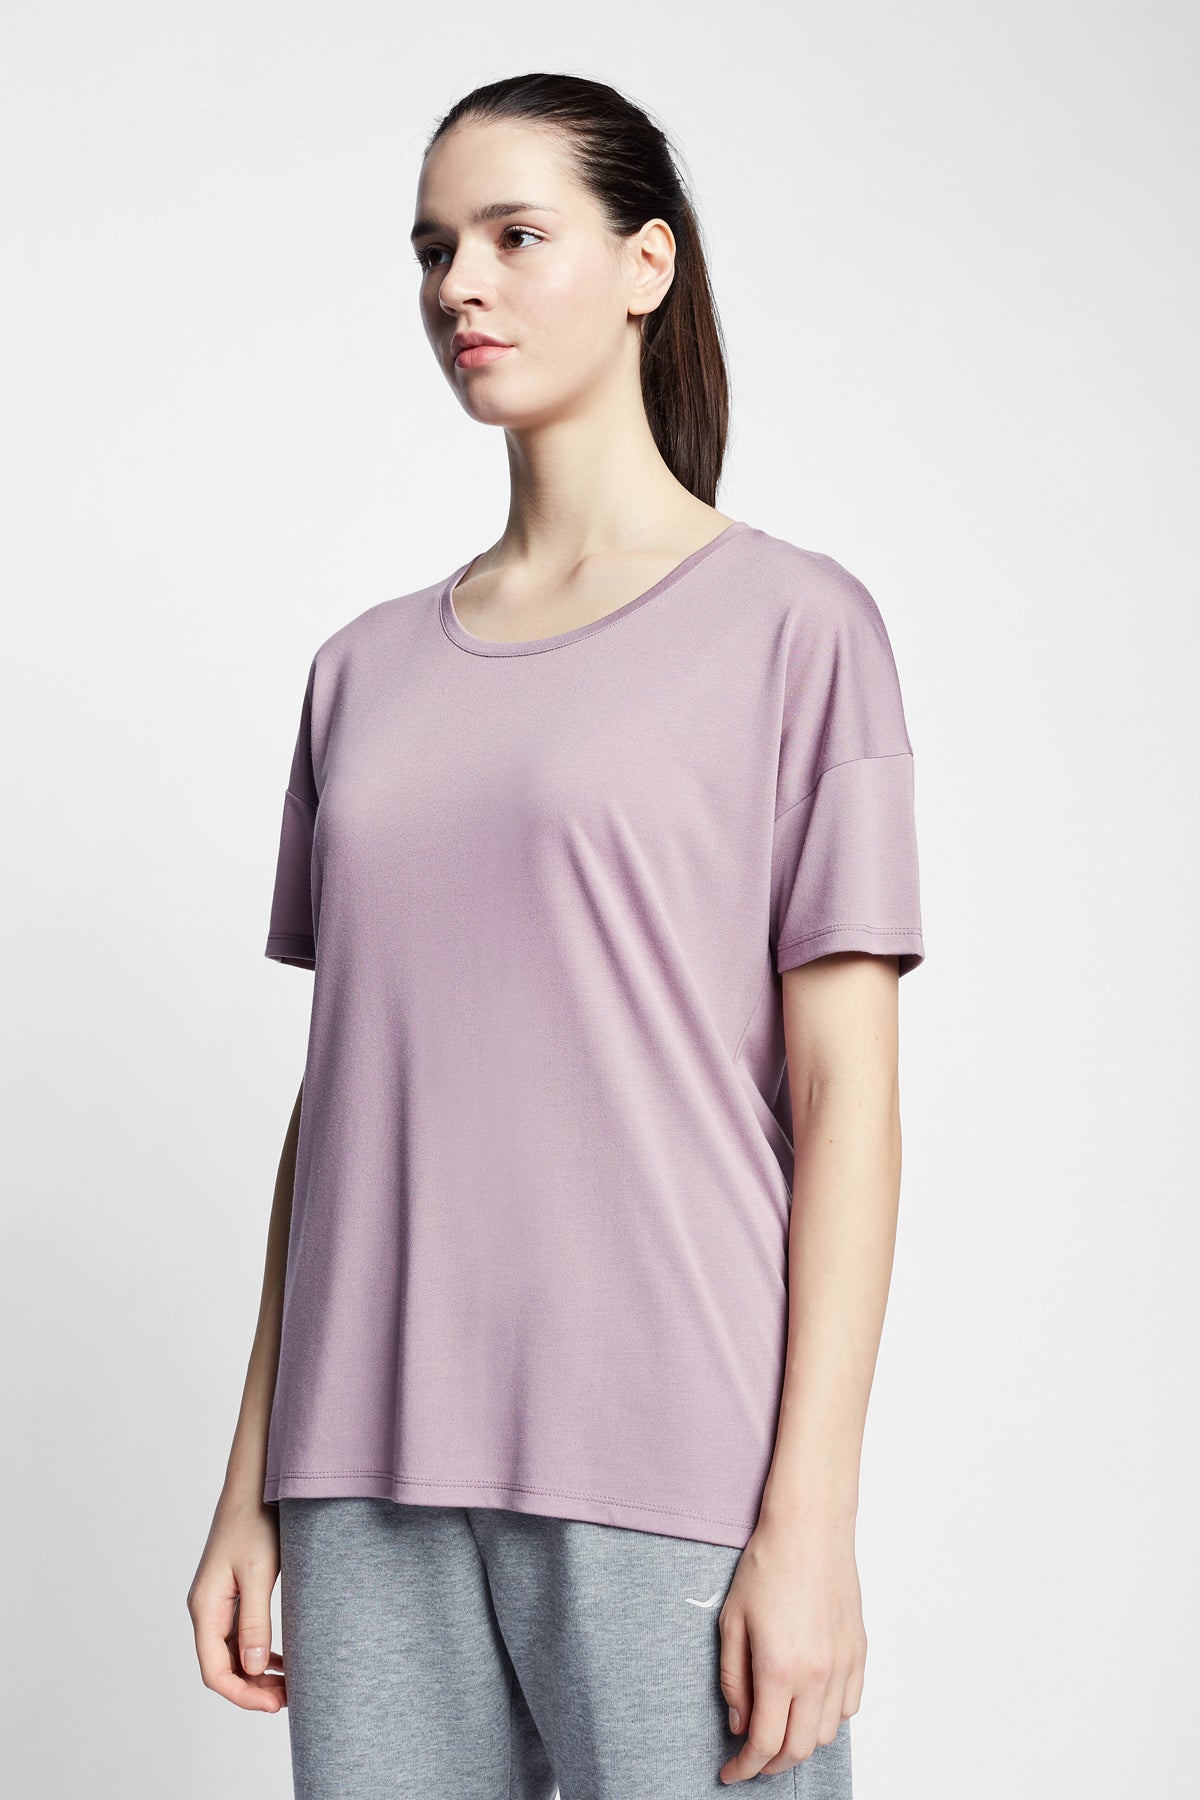 Leylak Kadın Kısa Kollu T-Shirt 22S-2216-22N - Nasj Fashion